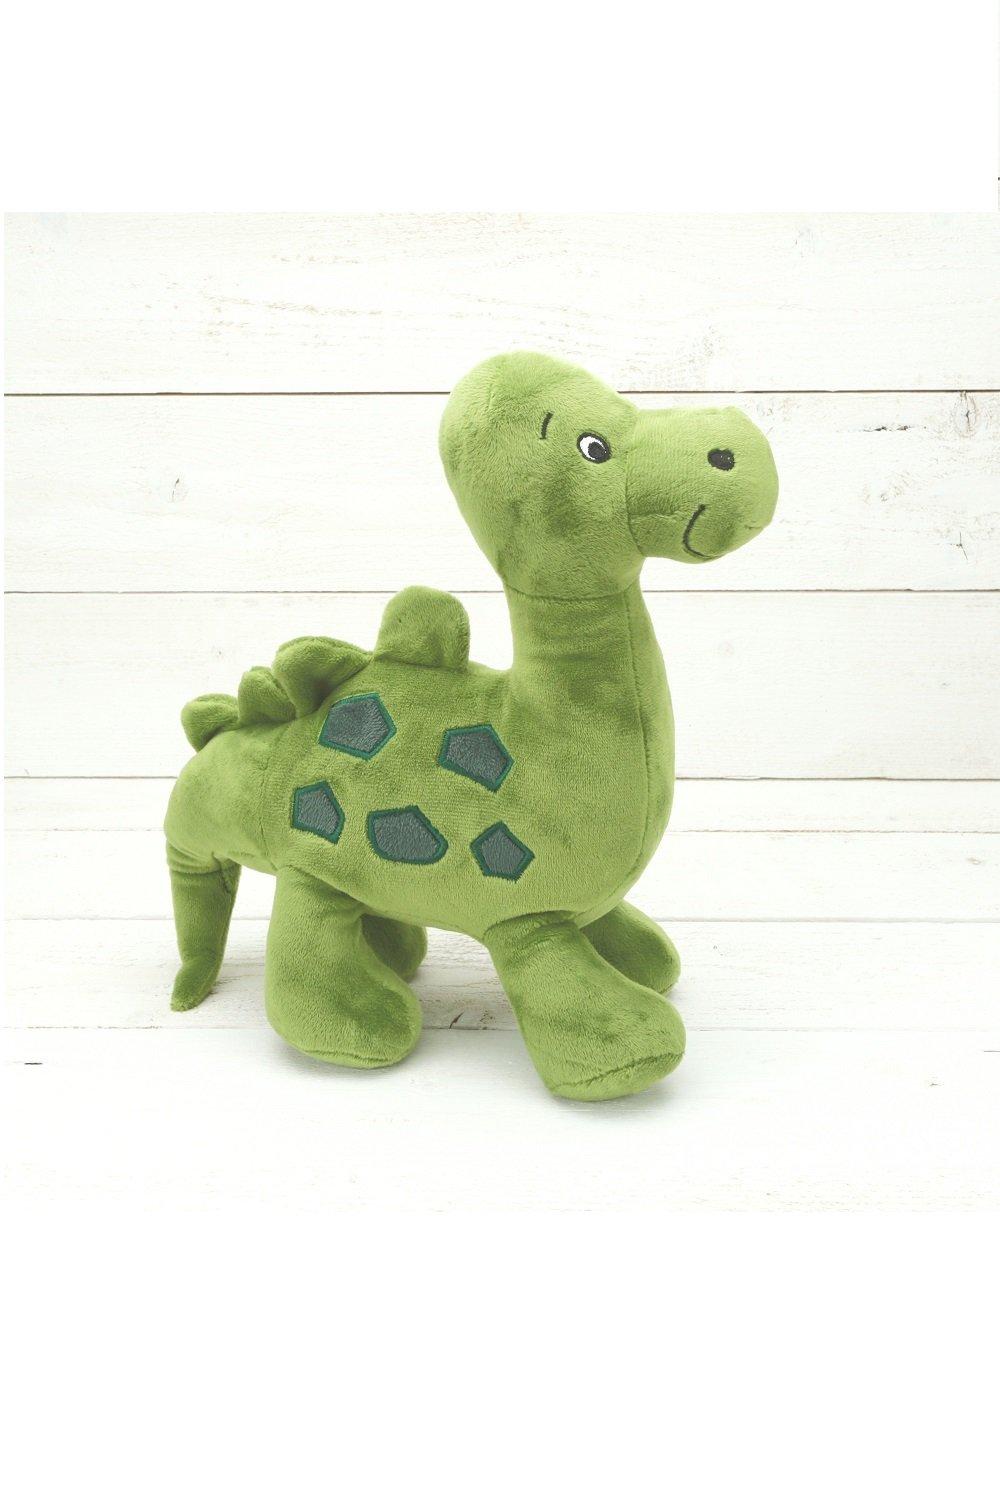 Green Dinosaur Toy - 25cm